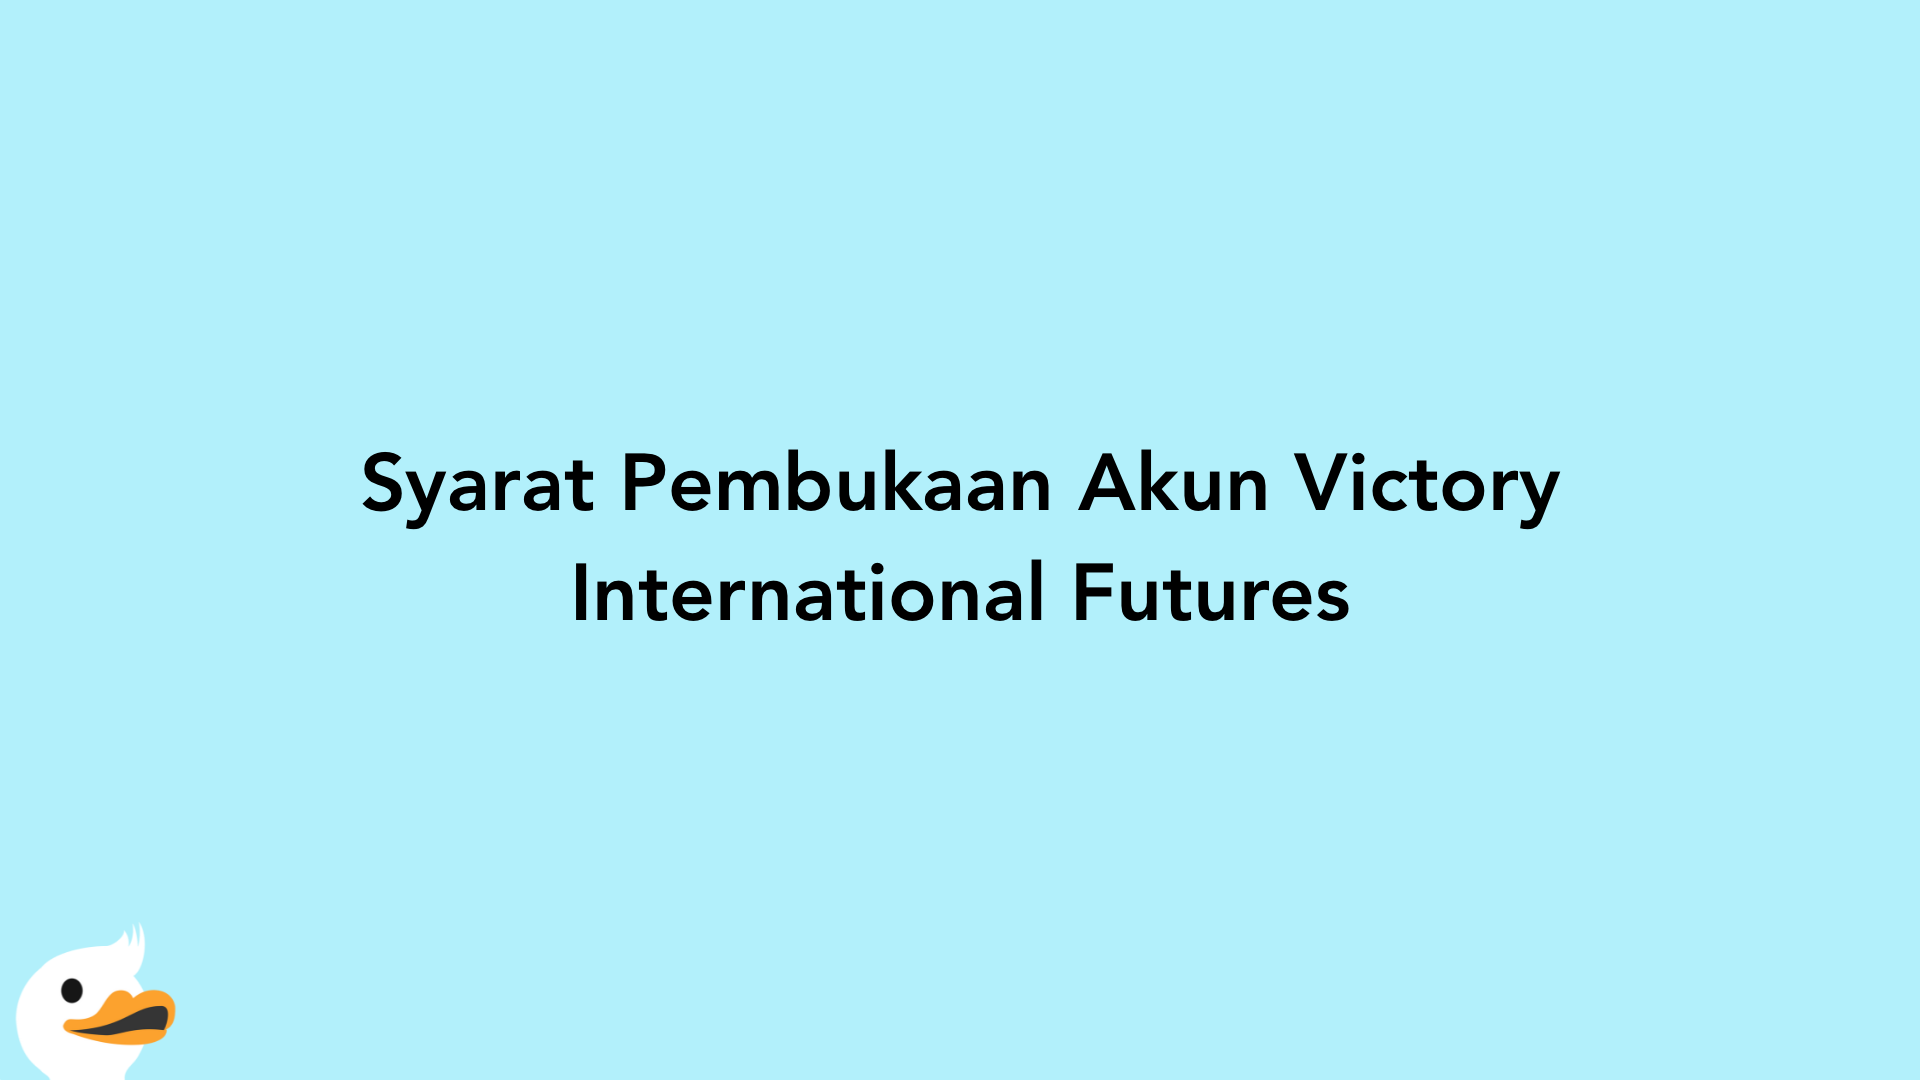 Syarat Pembukaan Akun Victory International Futures